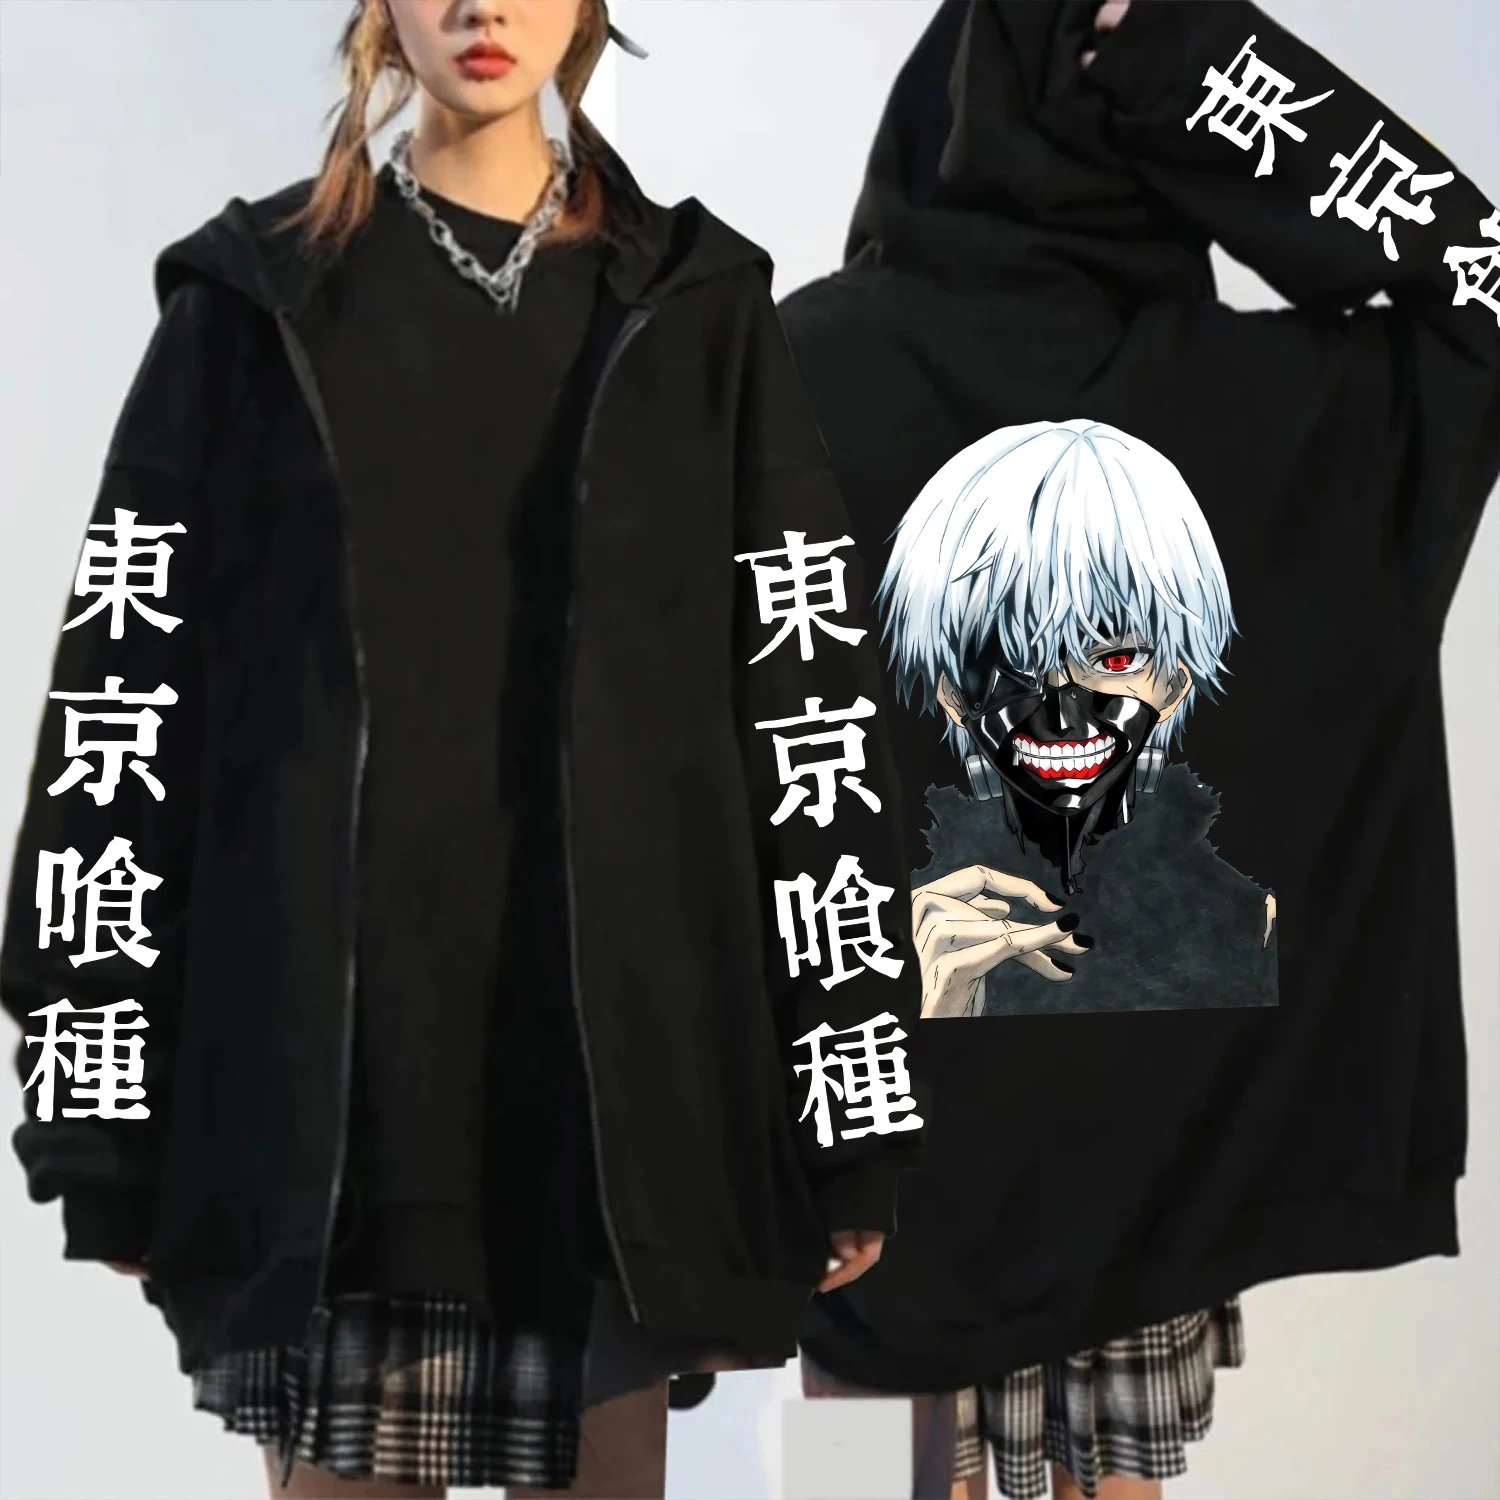 Tokyo Ghoul  Cartoon Zip up Hoodies Men Women  Fashion Winter Casual Warm Pockets Long Sleeves Zipper Jacket Coats